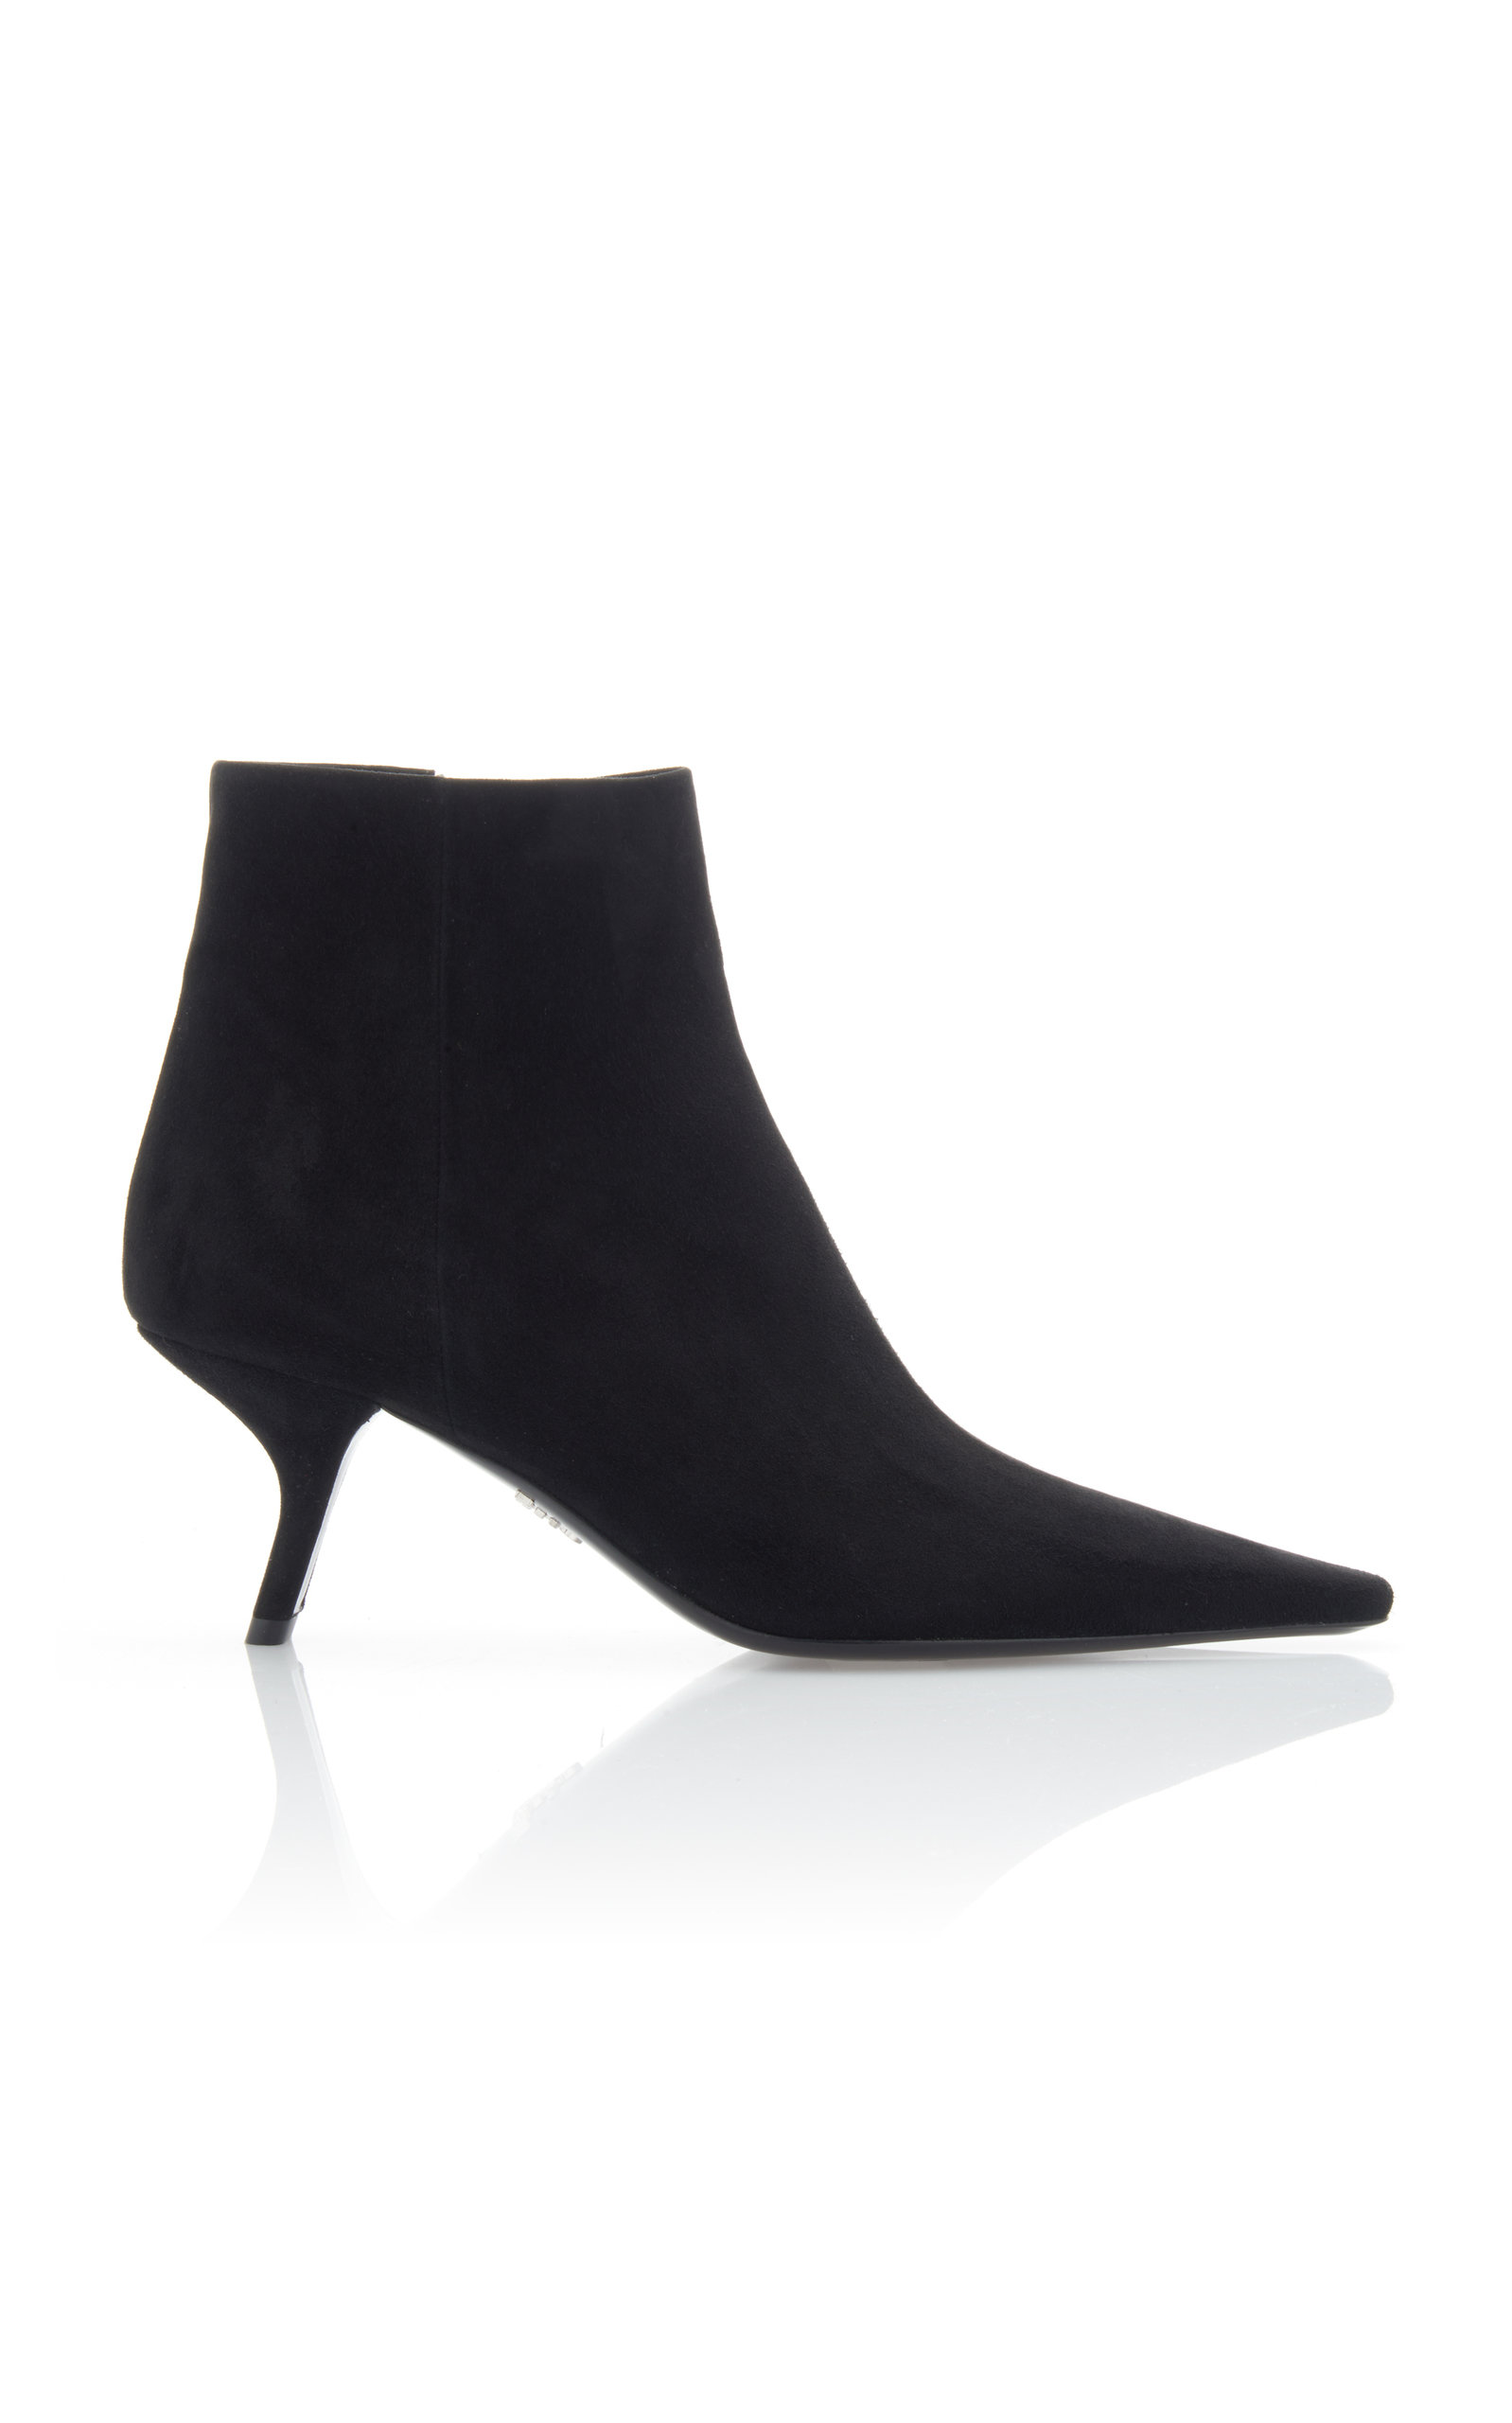 Prada - Women's Suede Ankle Boots - Black - Moda Operandi